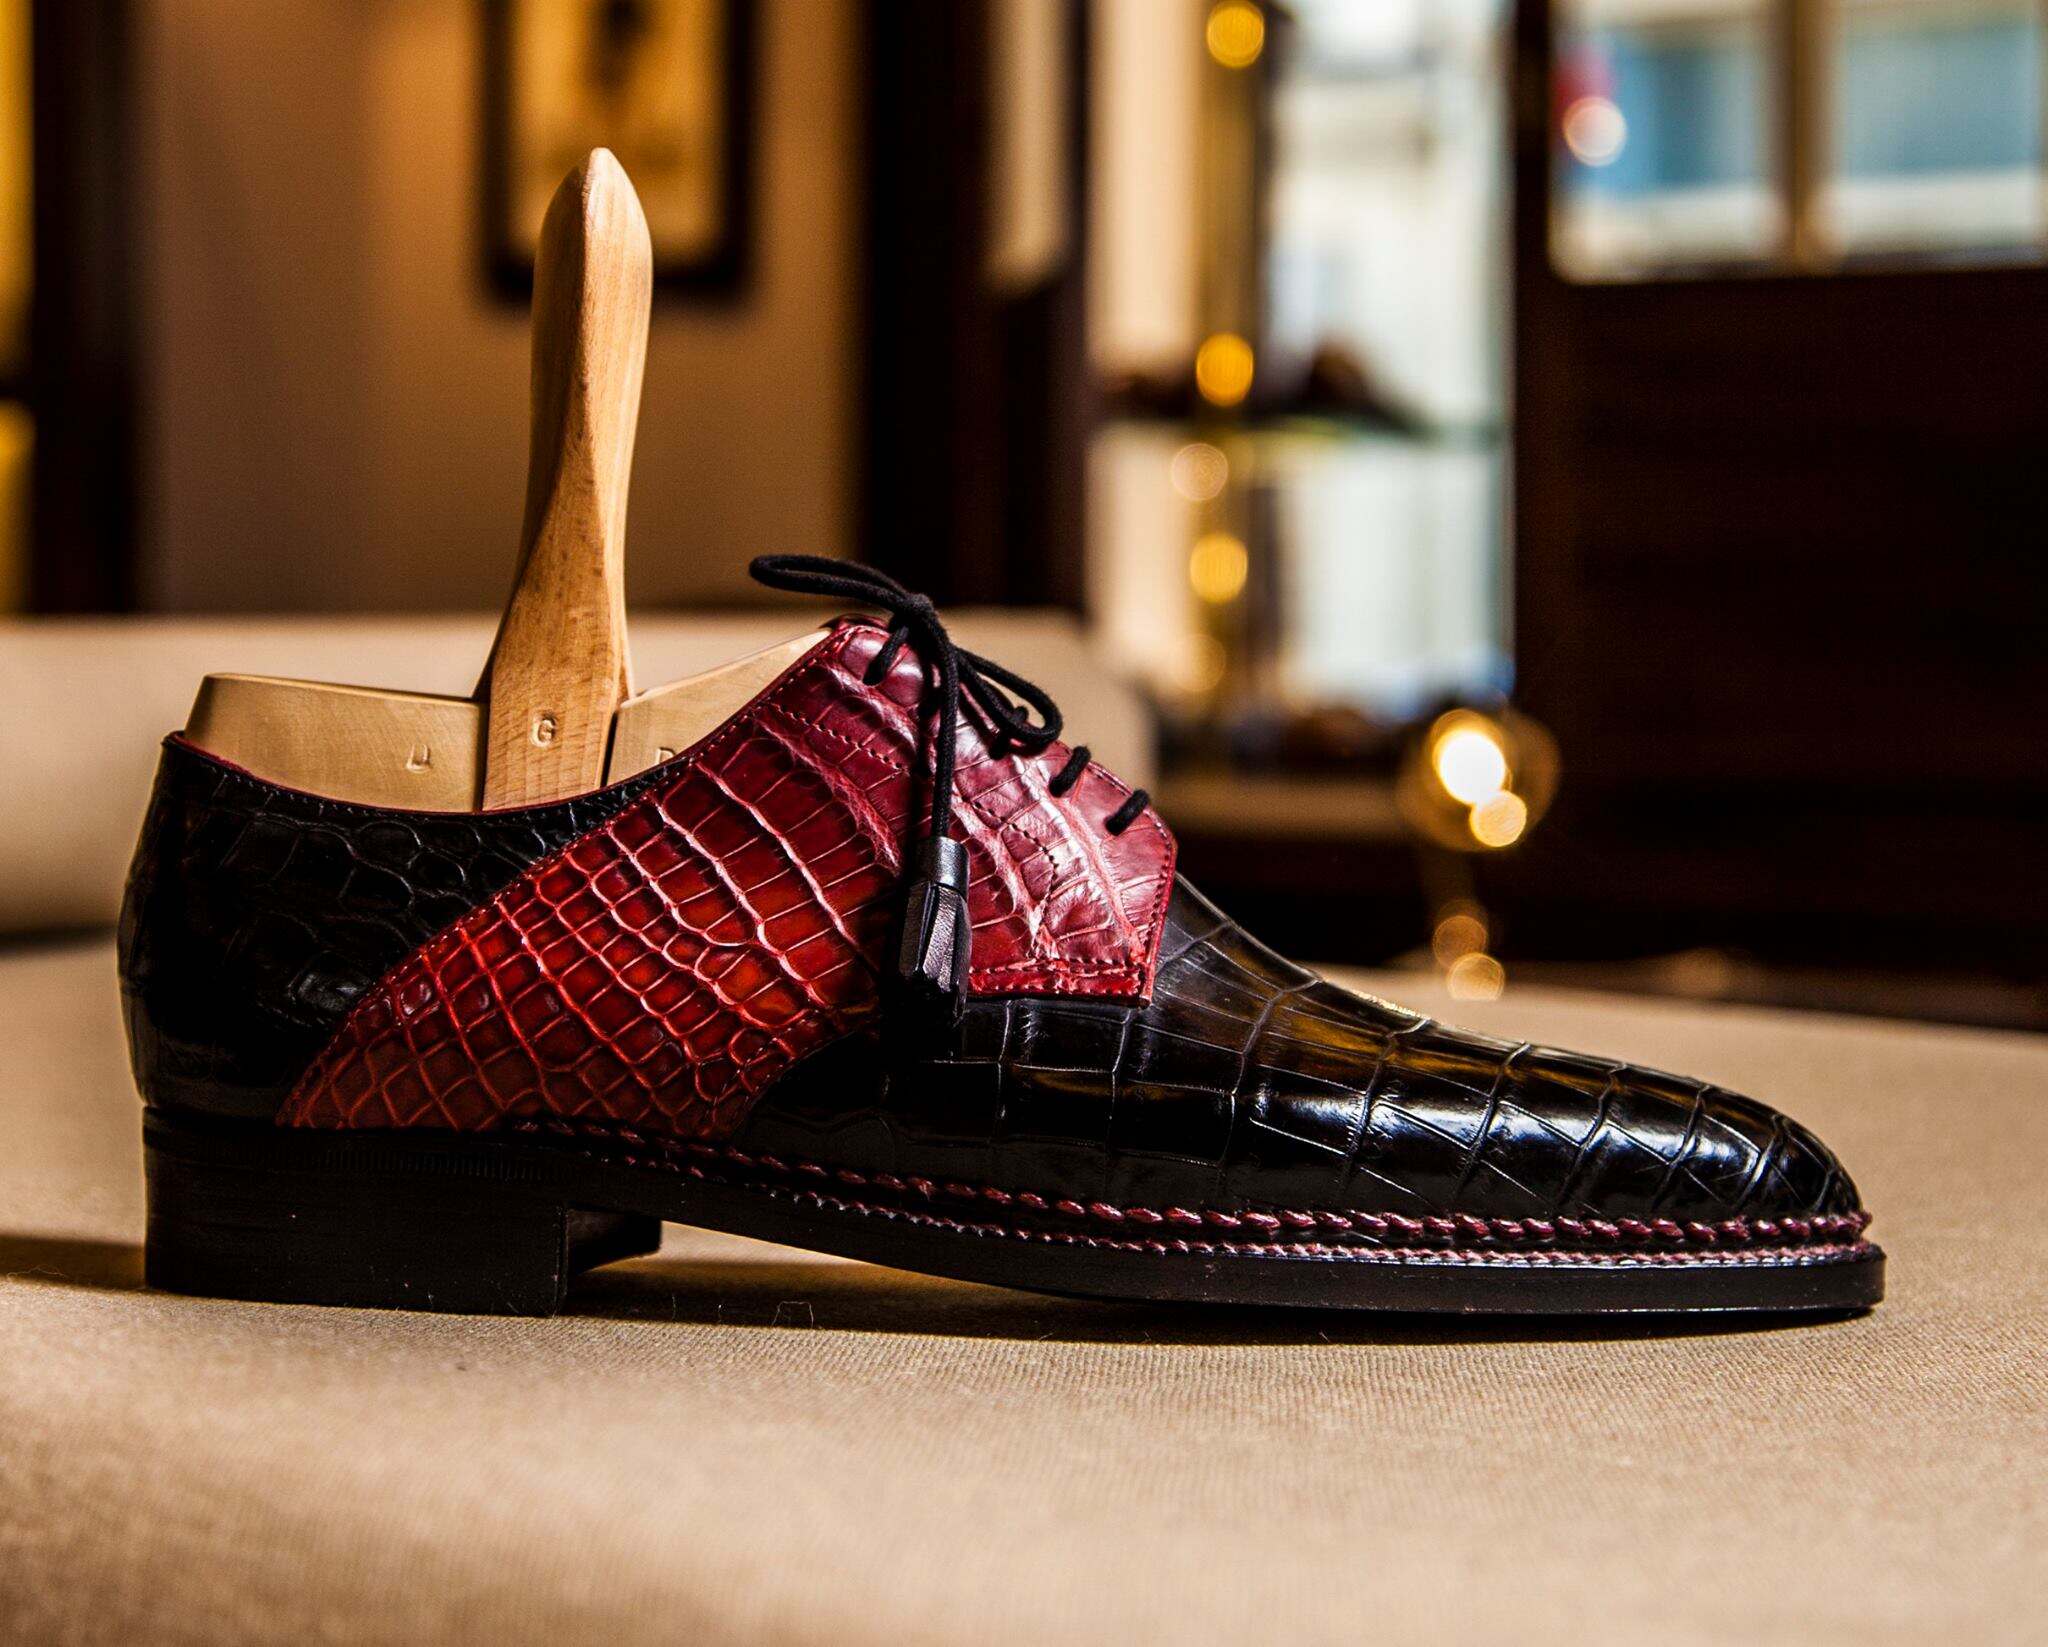 Dimitri Gomez bespoke shoes, picture courtesy of Parisian Gentleman